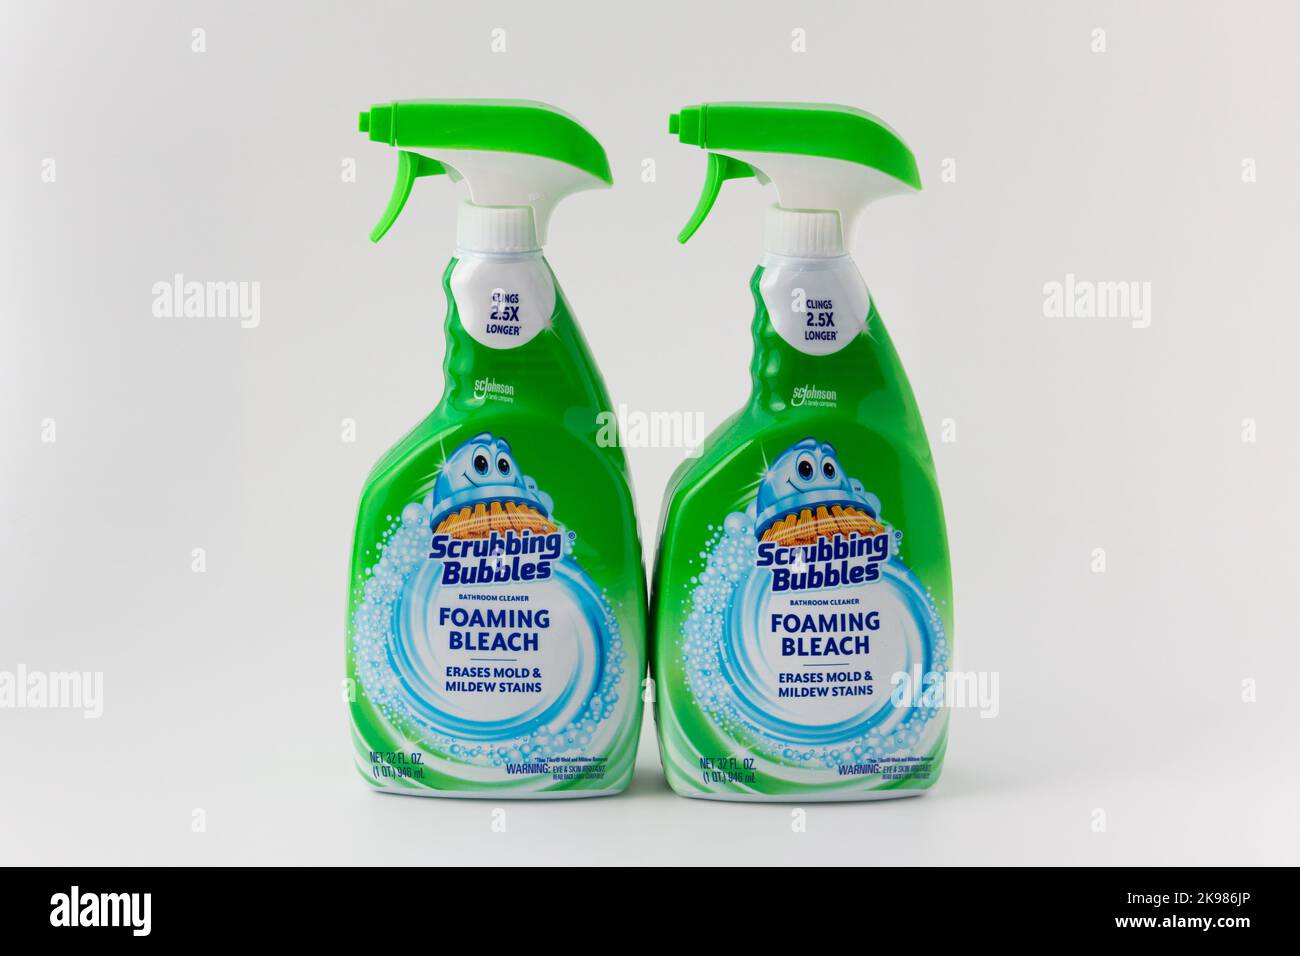 Scrubbing Bubbles Bathroom Cleaner Spray, Orange Action, 950 ml